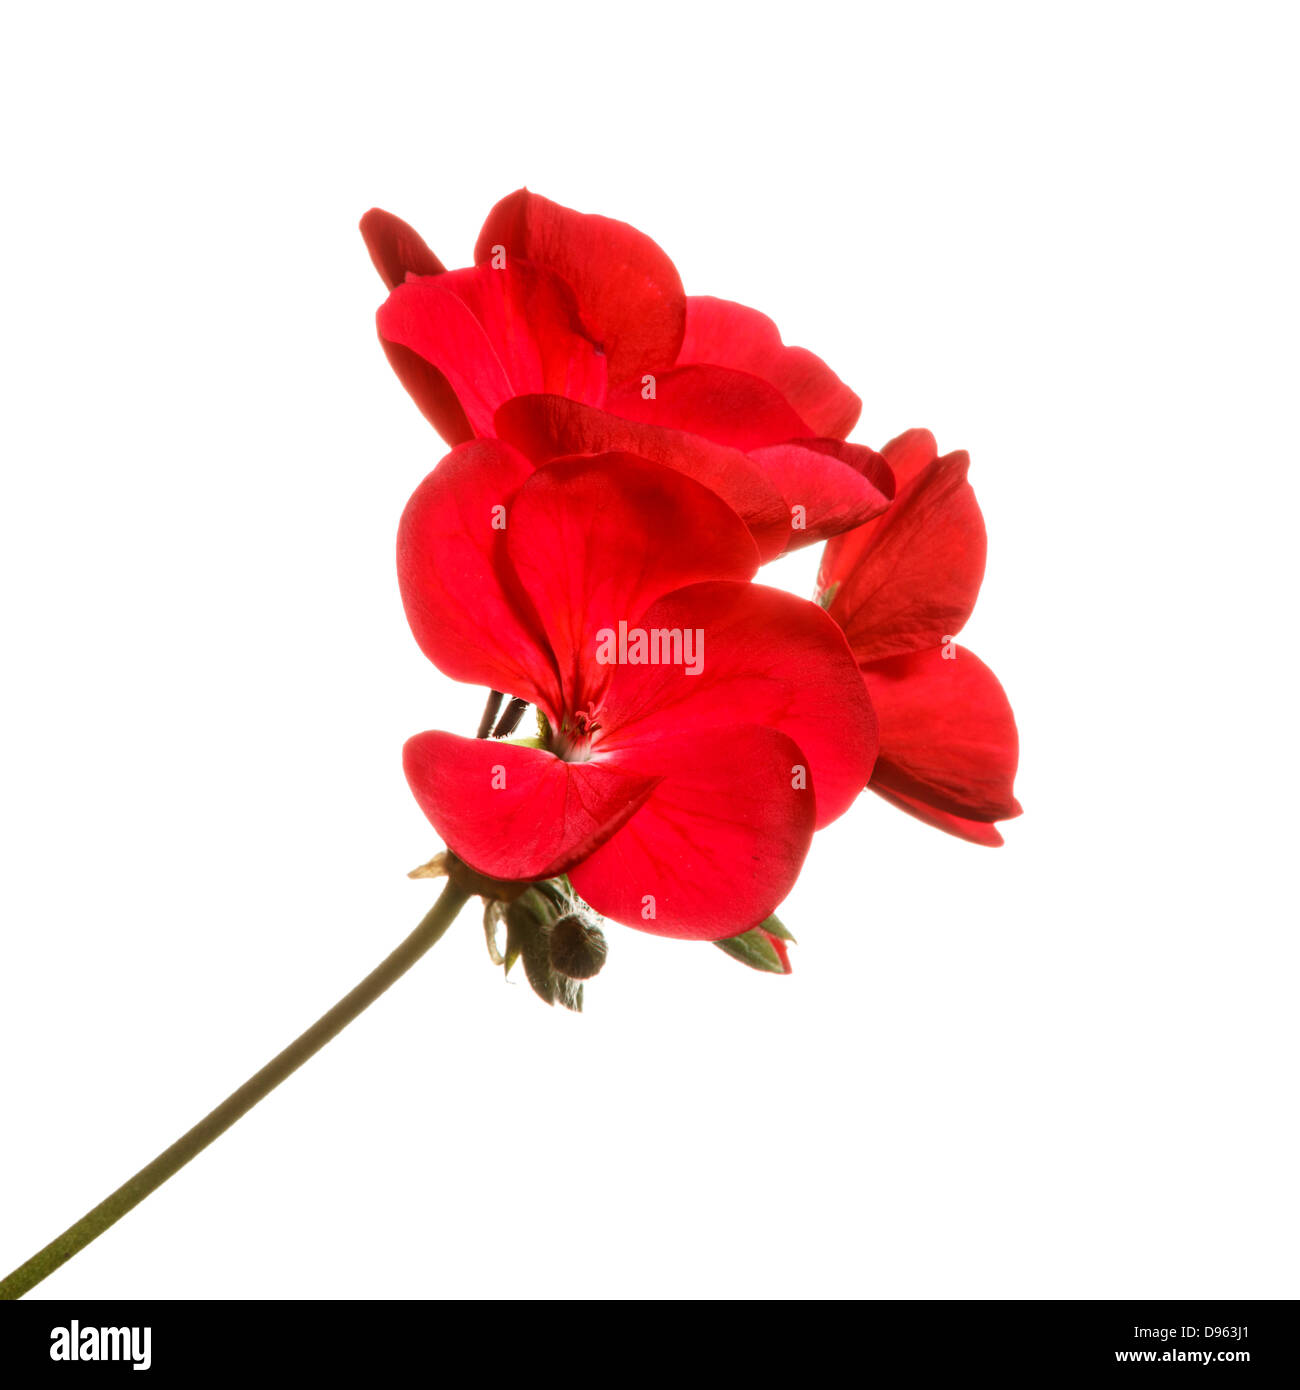 Red geranium flower set against pure white background Stock Photo